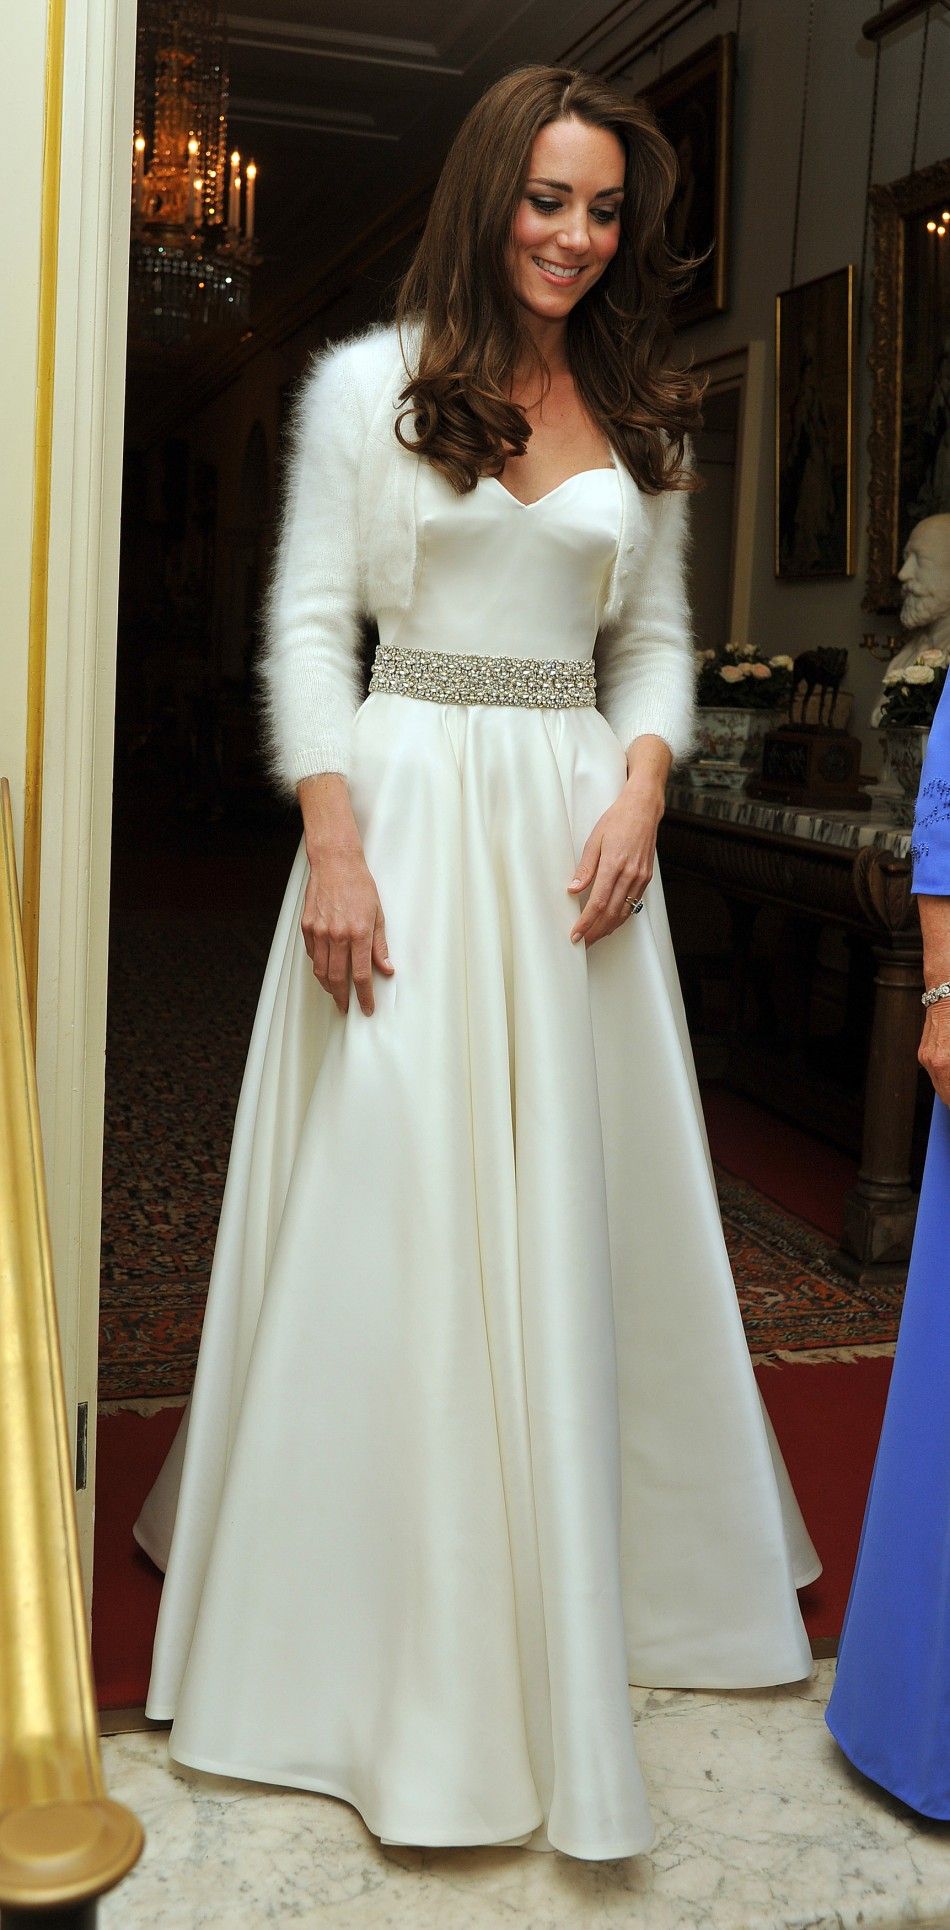 Kate Middleton in Alexander McQueen for her wedding reception